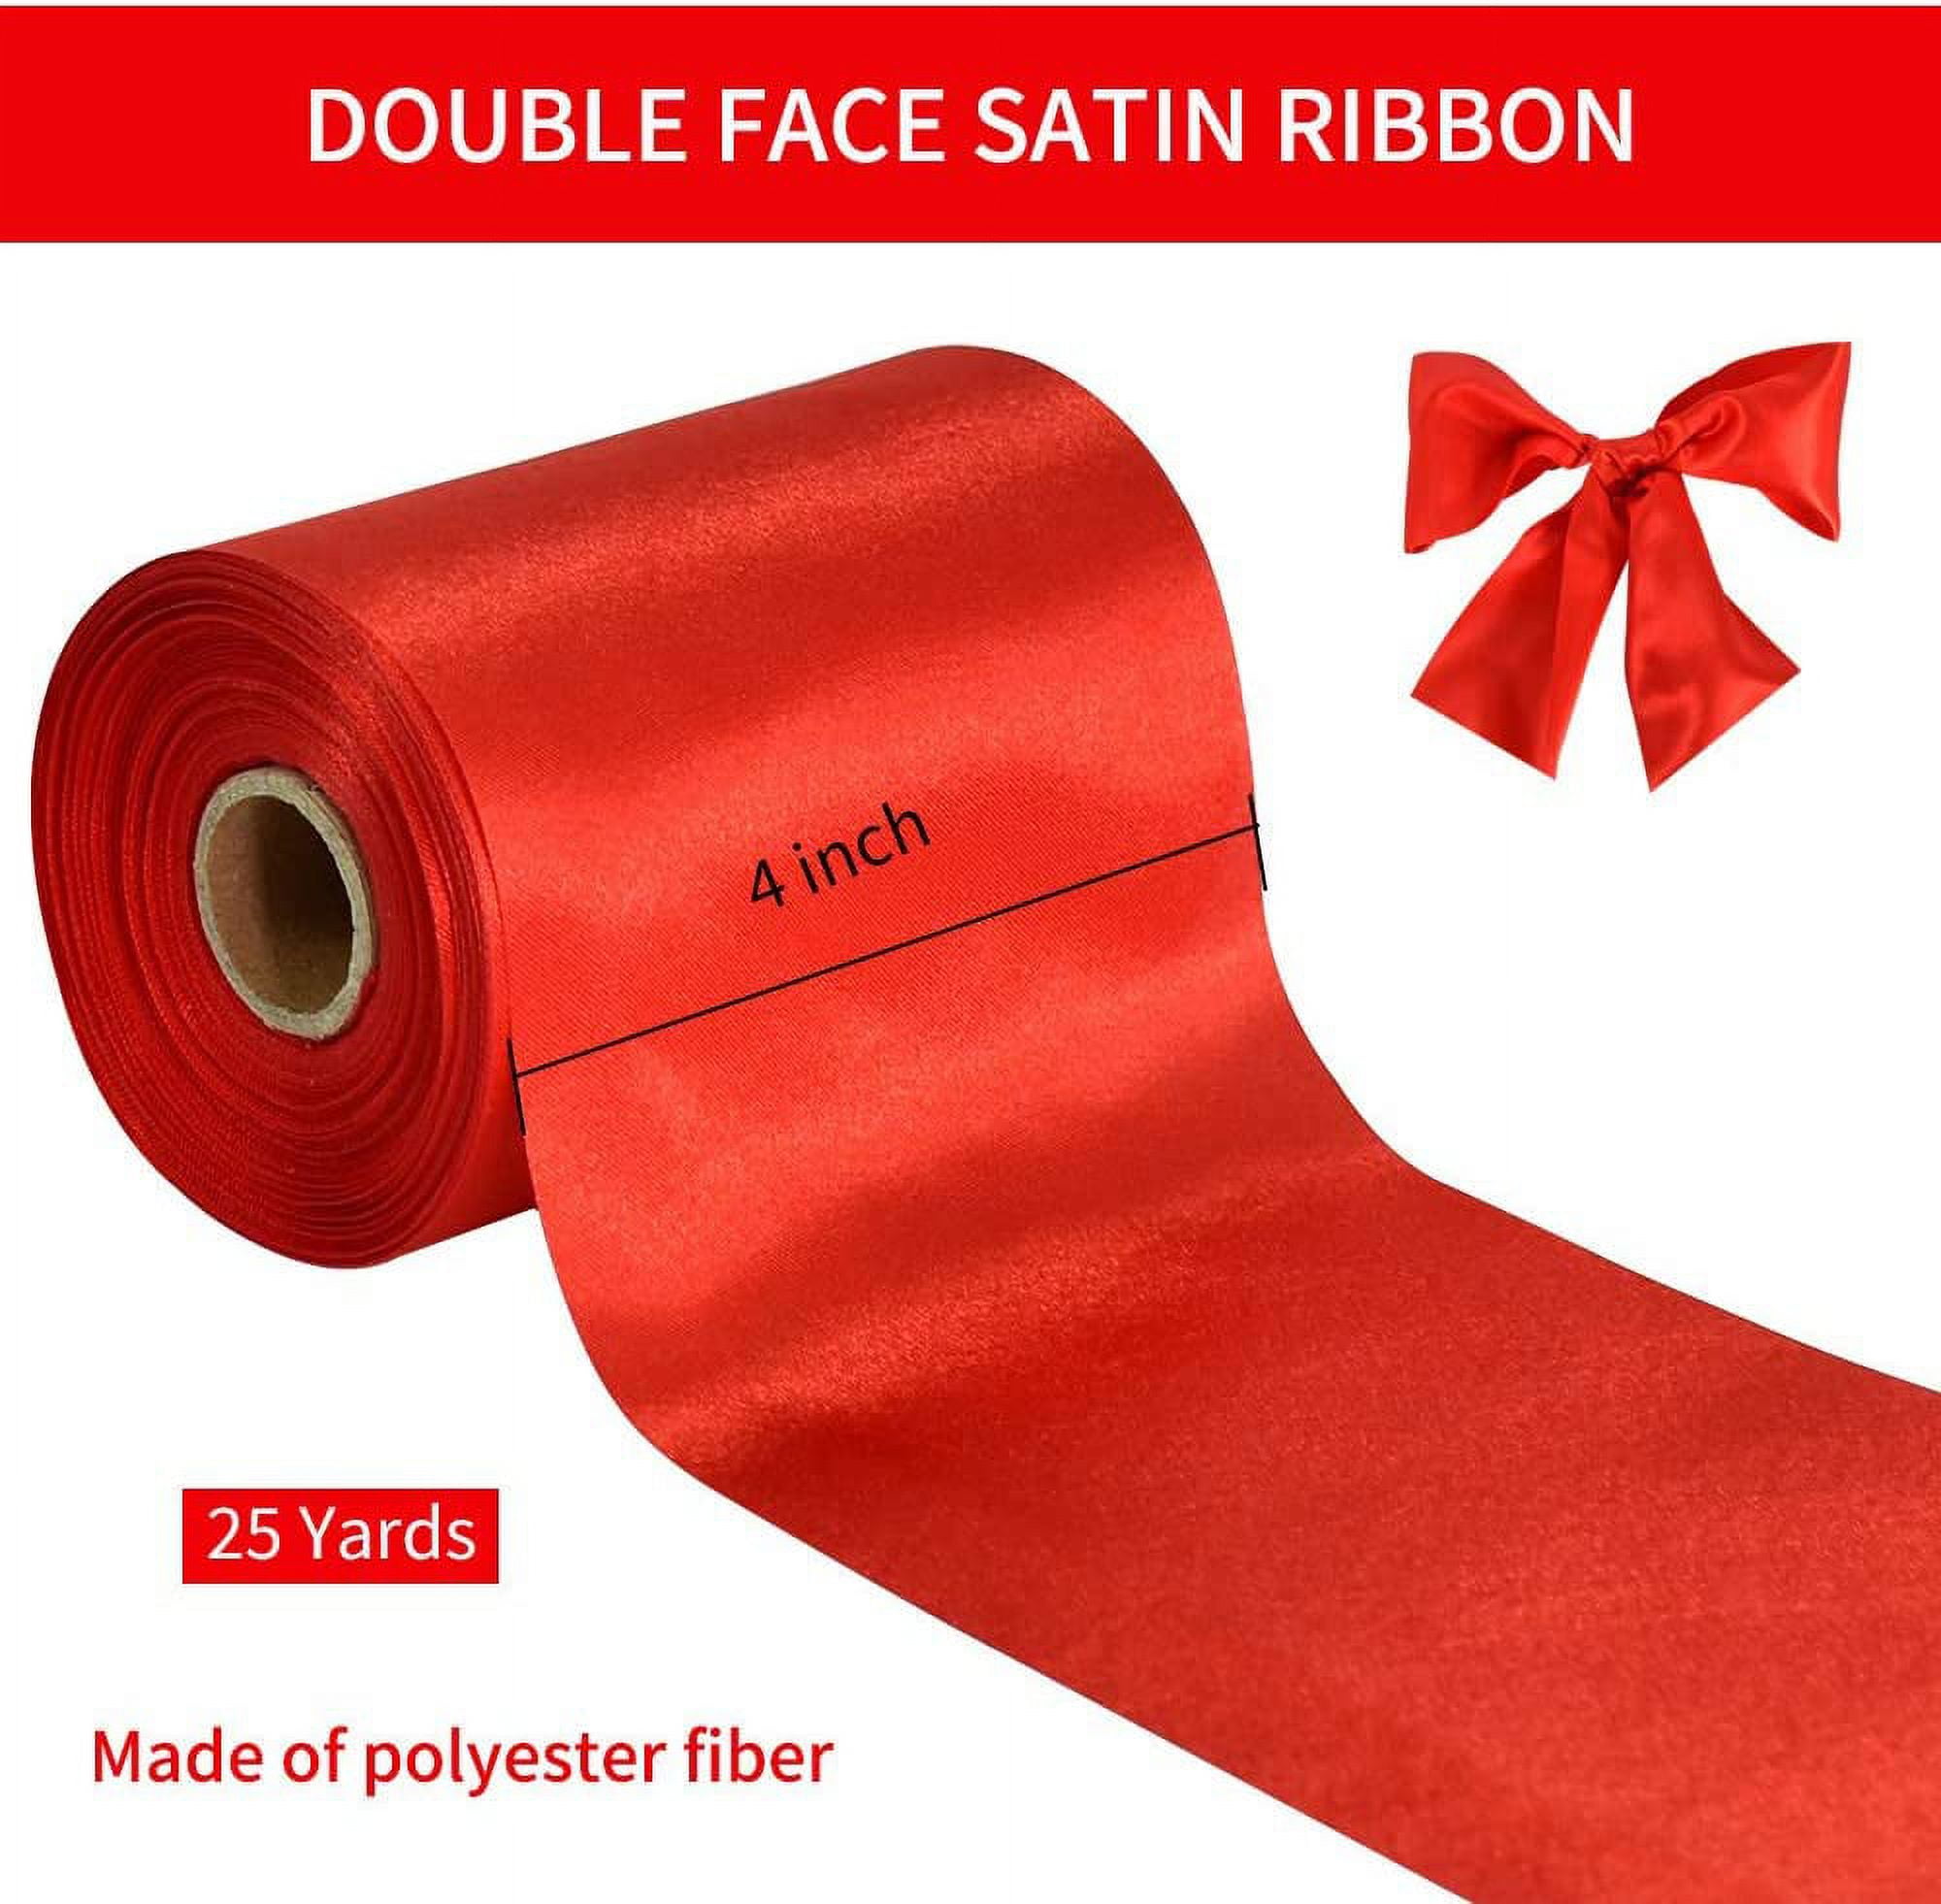 TONIFUL Happy Birthday Ribbon 1 Inch Red Satin Silk Ribbons for Gift  Wrapping 50 Yards Chiffon Organ…See more TONIFUL Happy Birthday Ribbon 1  Inch Red